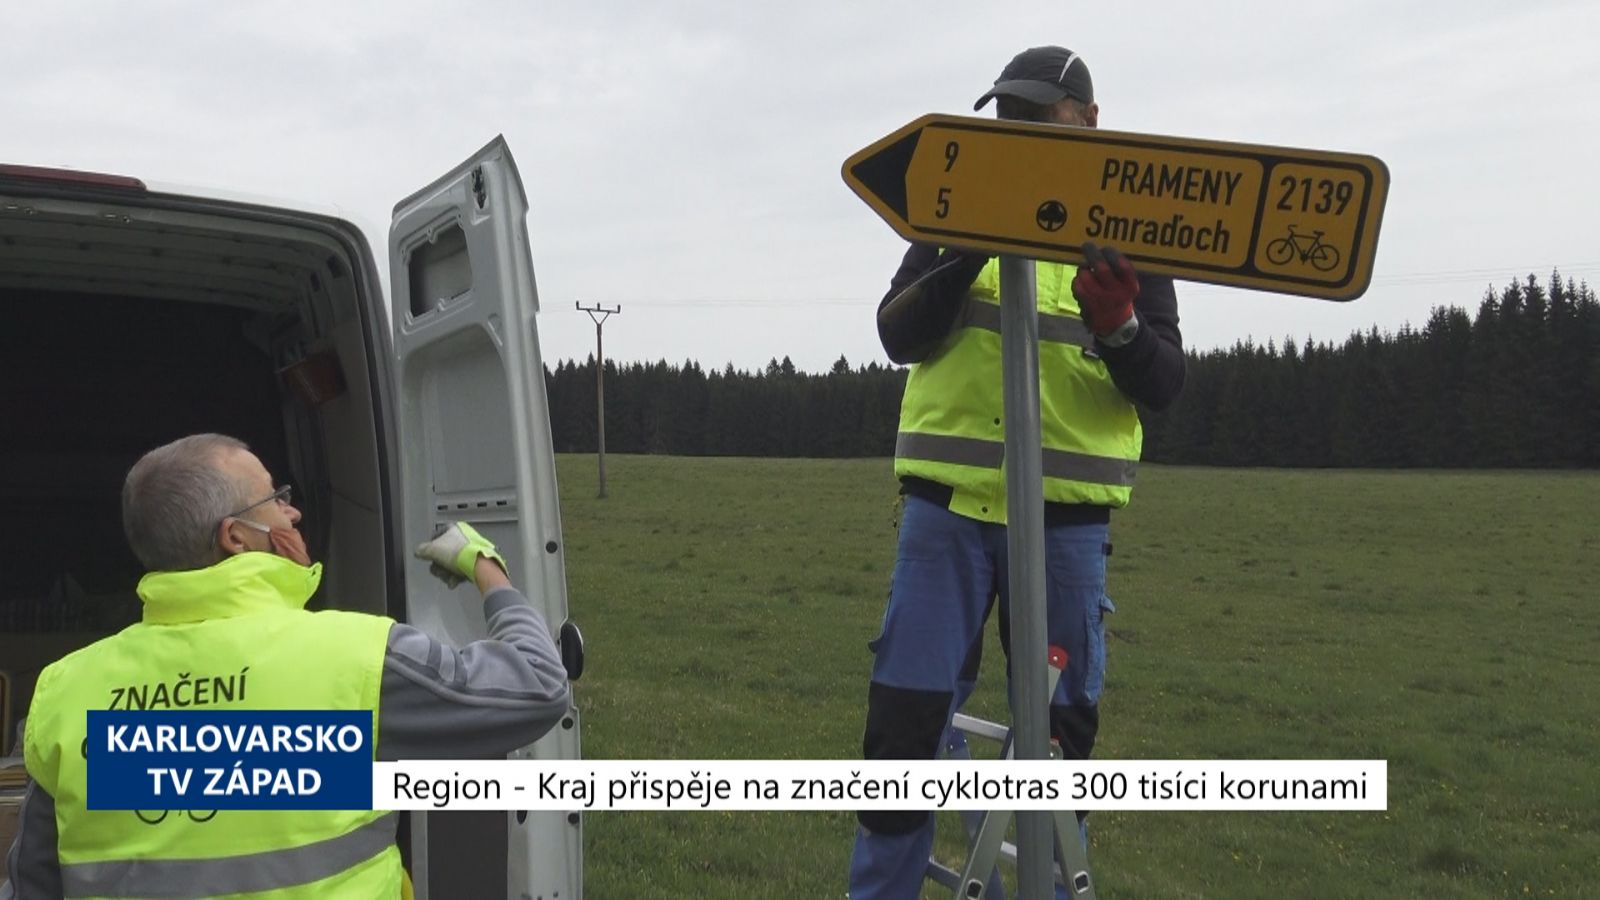 Region: Kraj přispěje na značení cyklotras 300 tisíci korunami (TV Západ)	